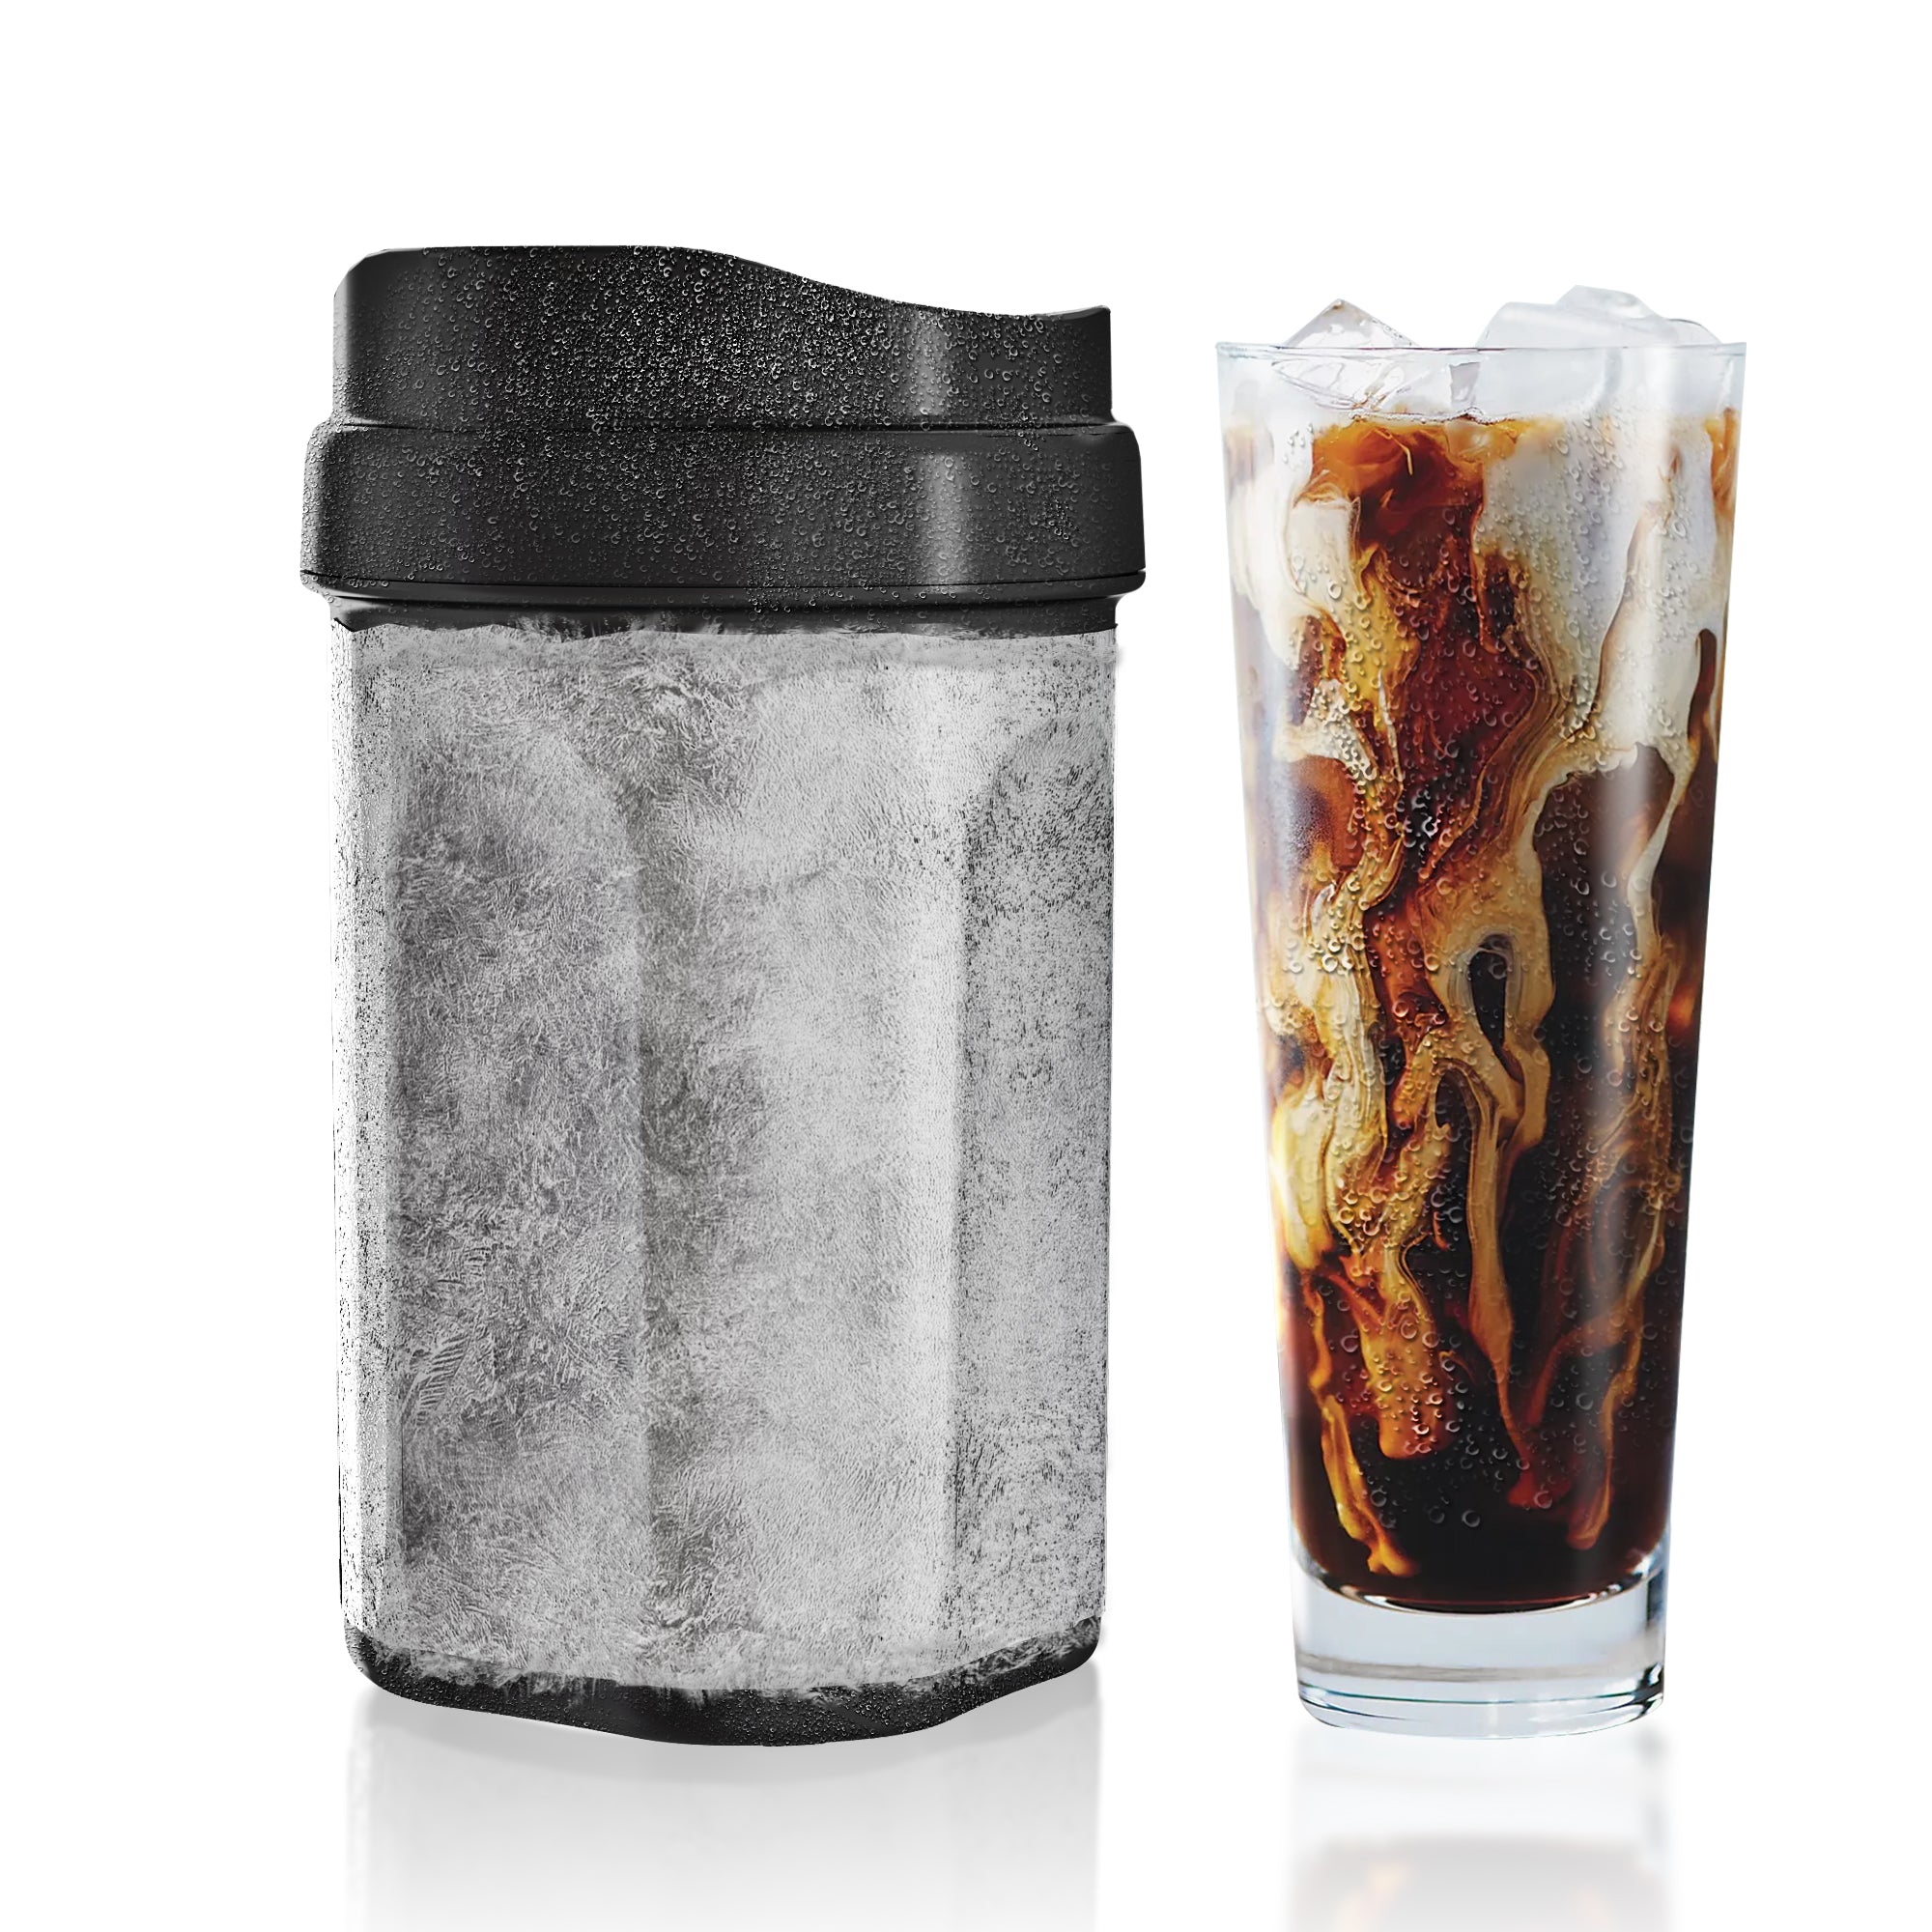 < img src="ice tea coffee maker.jpg" alt="wirsh coffee chiller black"/>